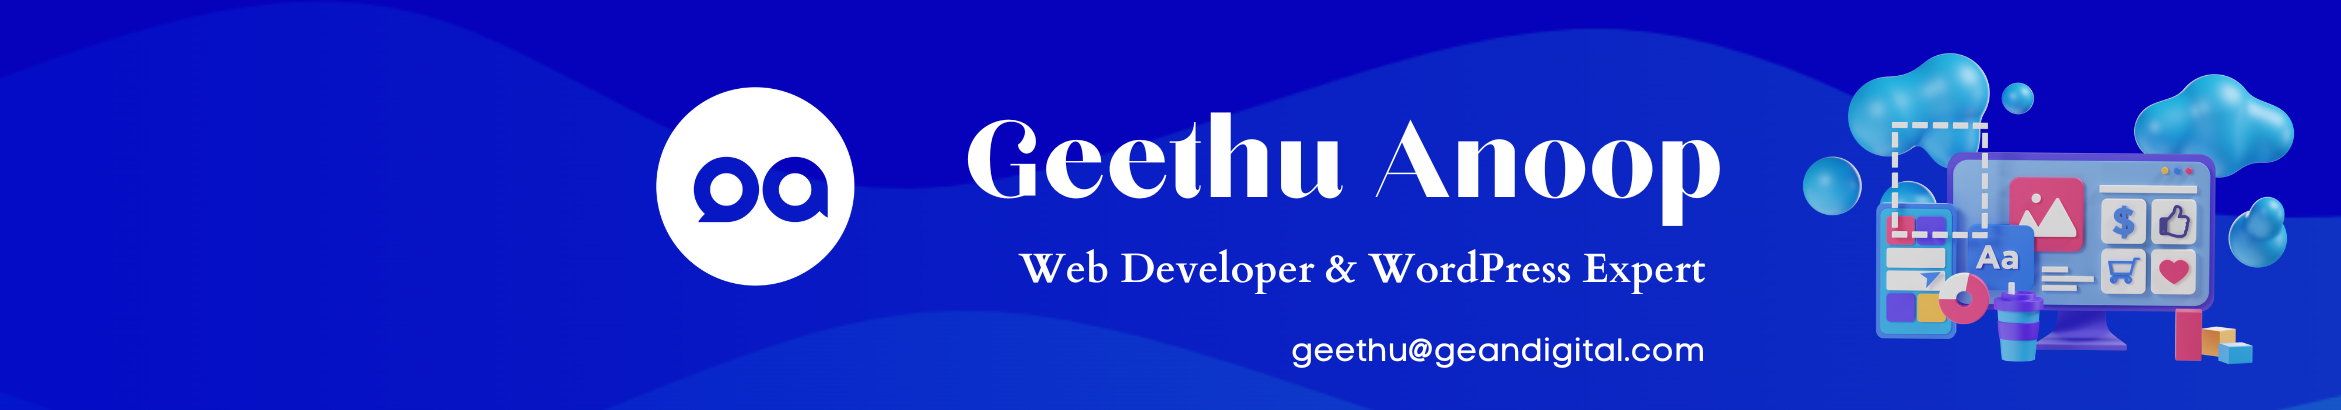 Geethu Anoop's profile banner